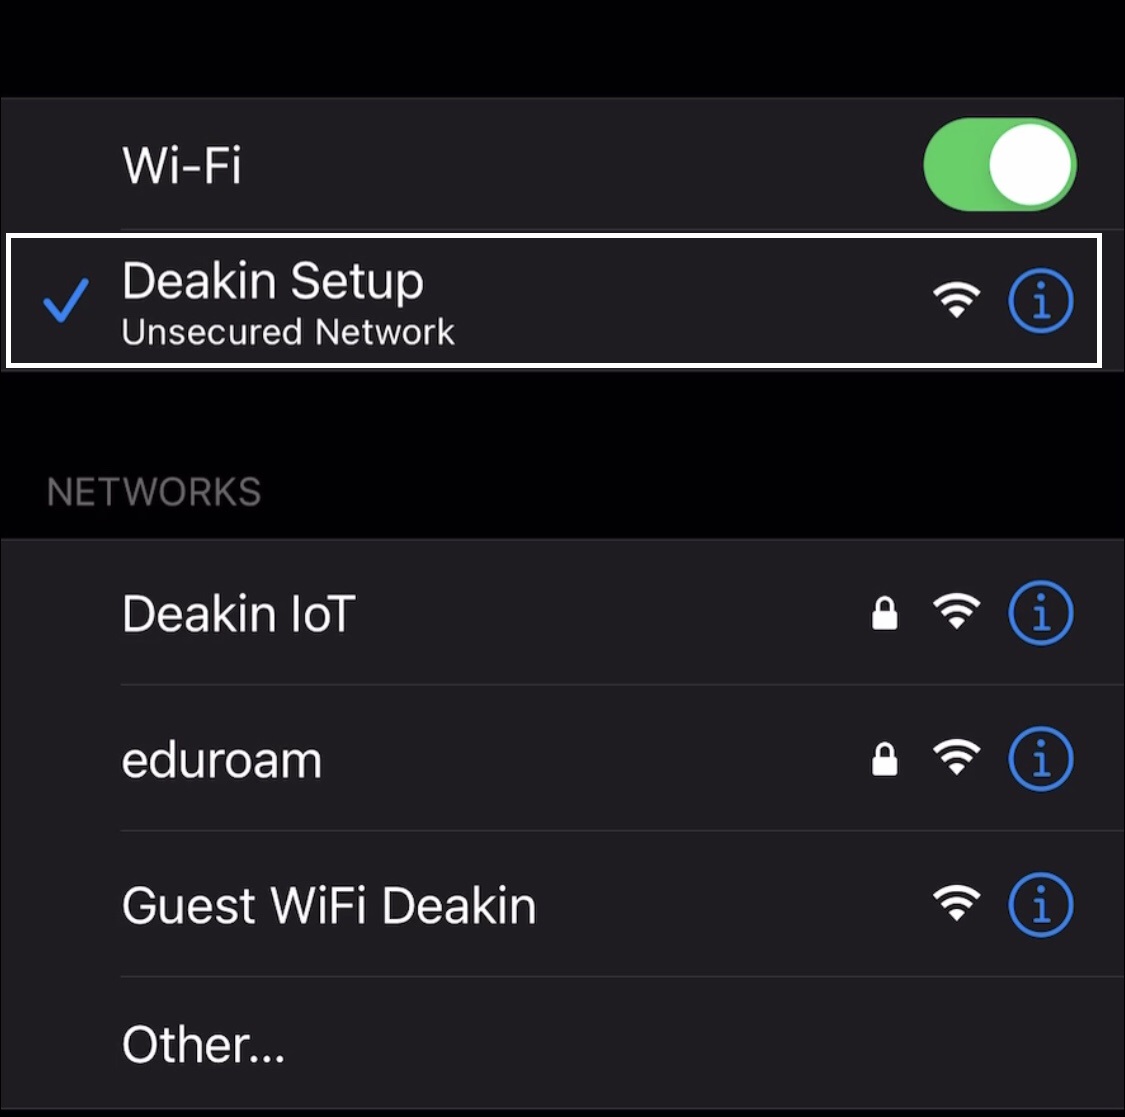 Wi-Fi toggled on, Deakin setup selected